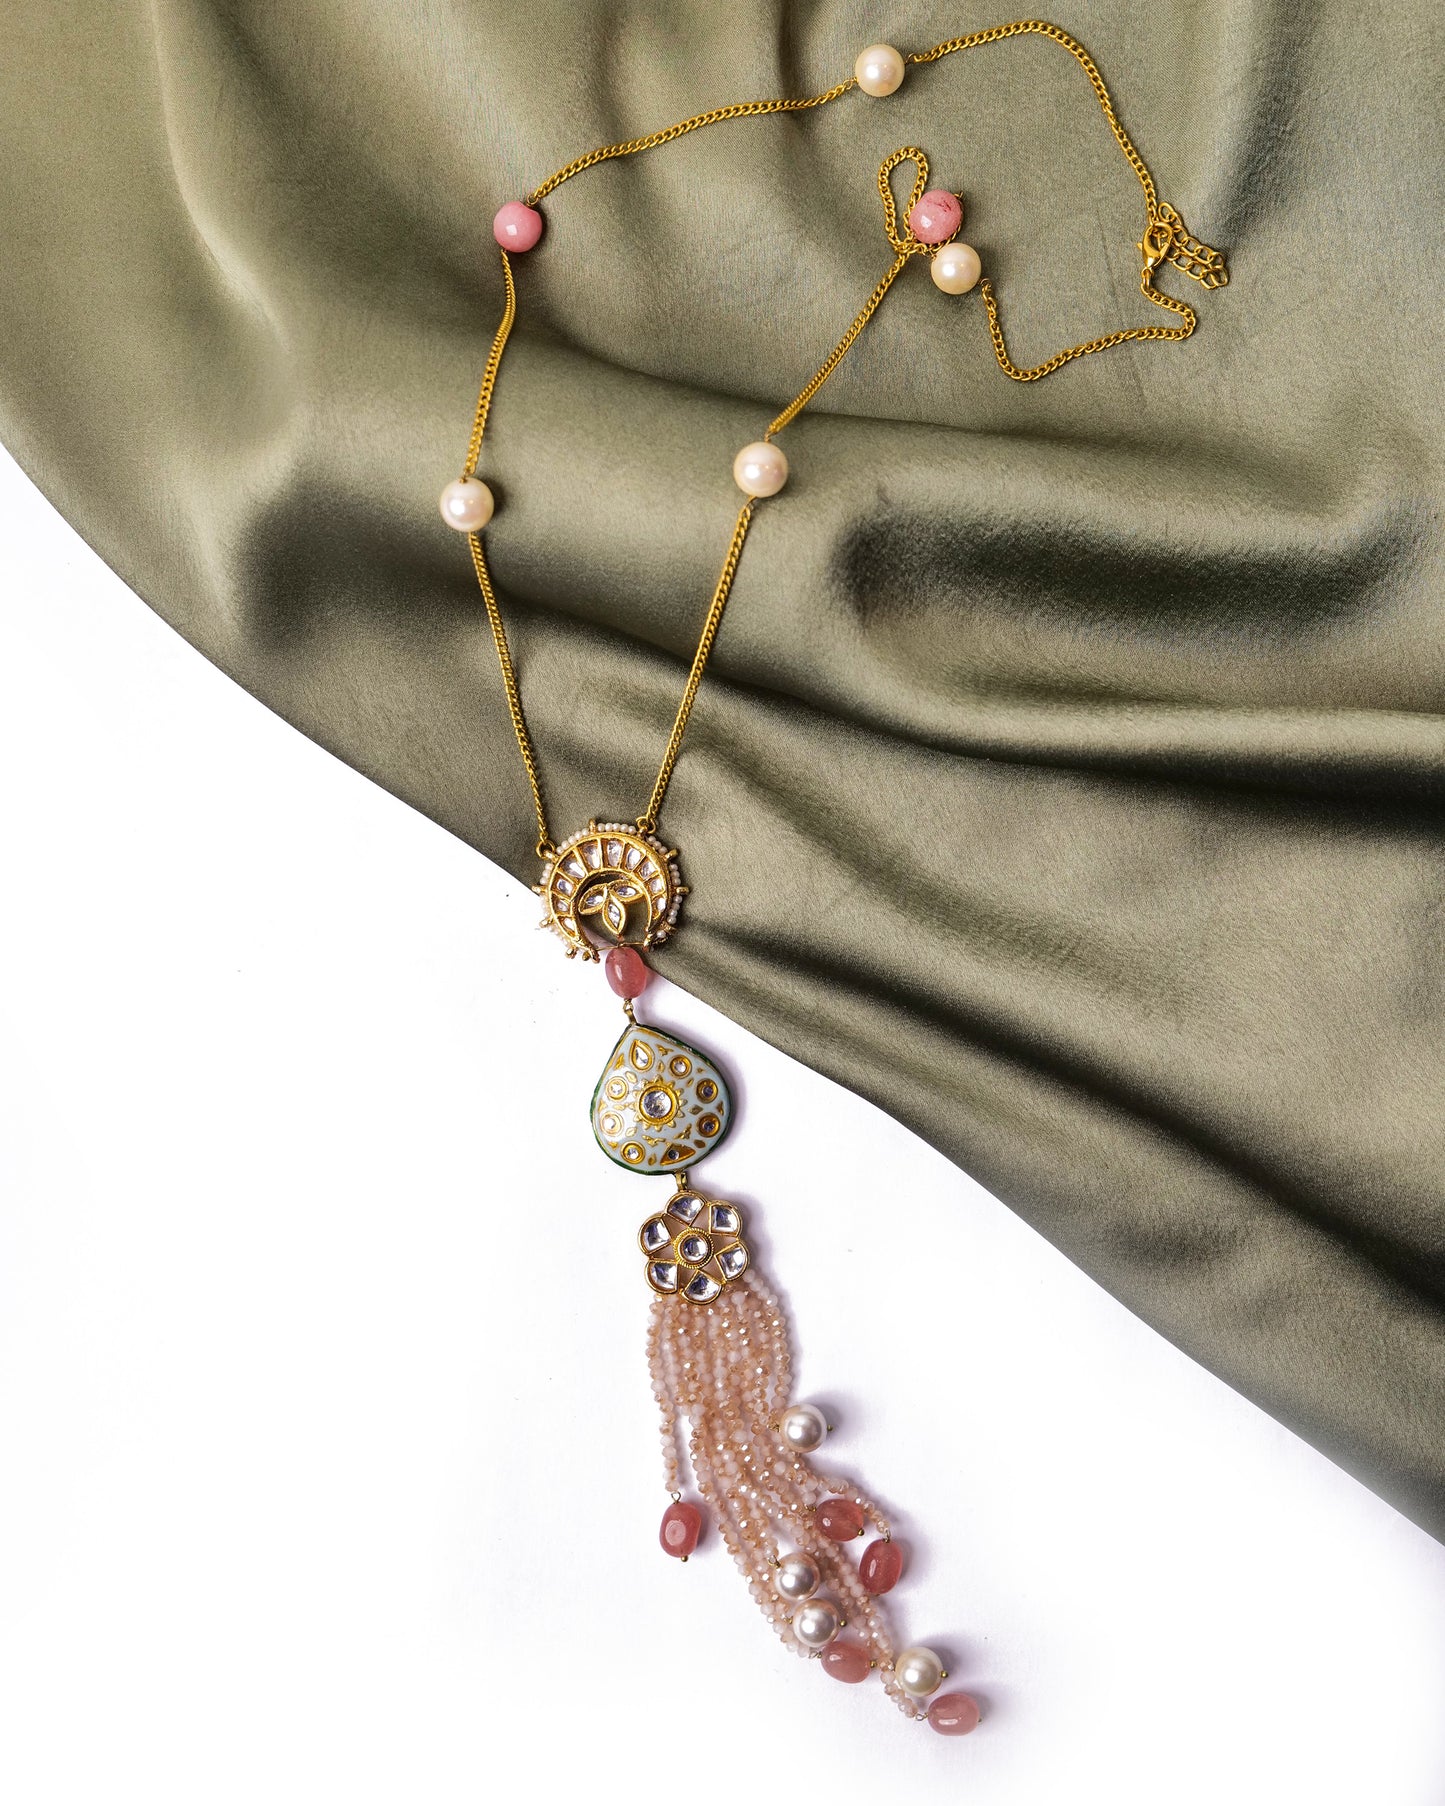 Kundan neckpiece with tassels and stones